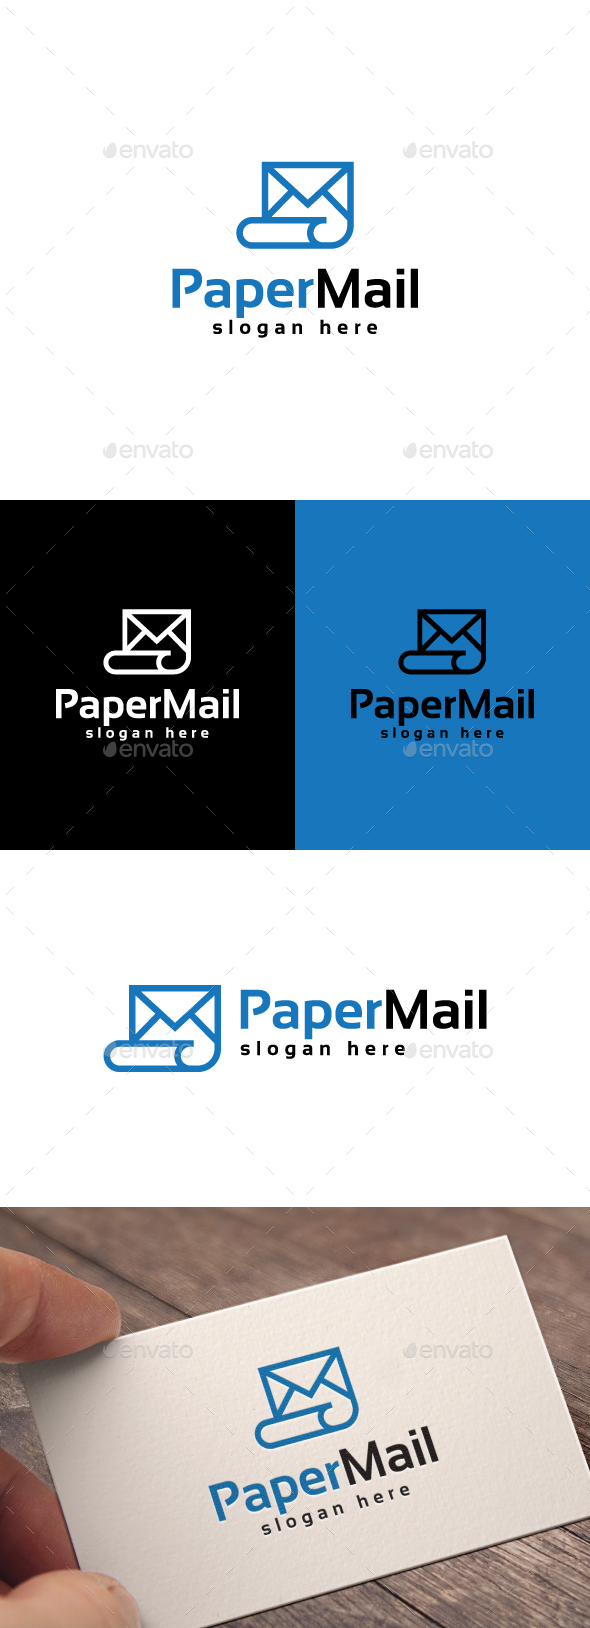 [DOWNLOAD]Paper Mail Logo